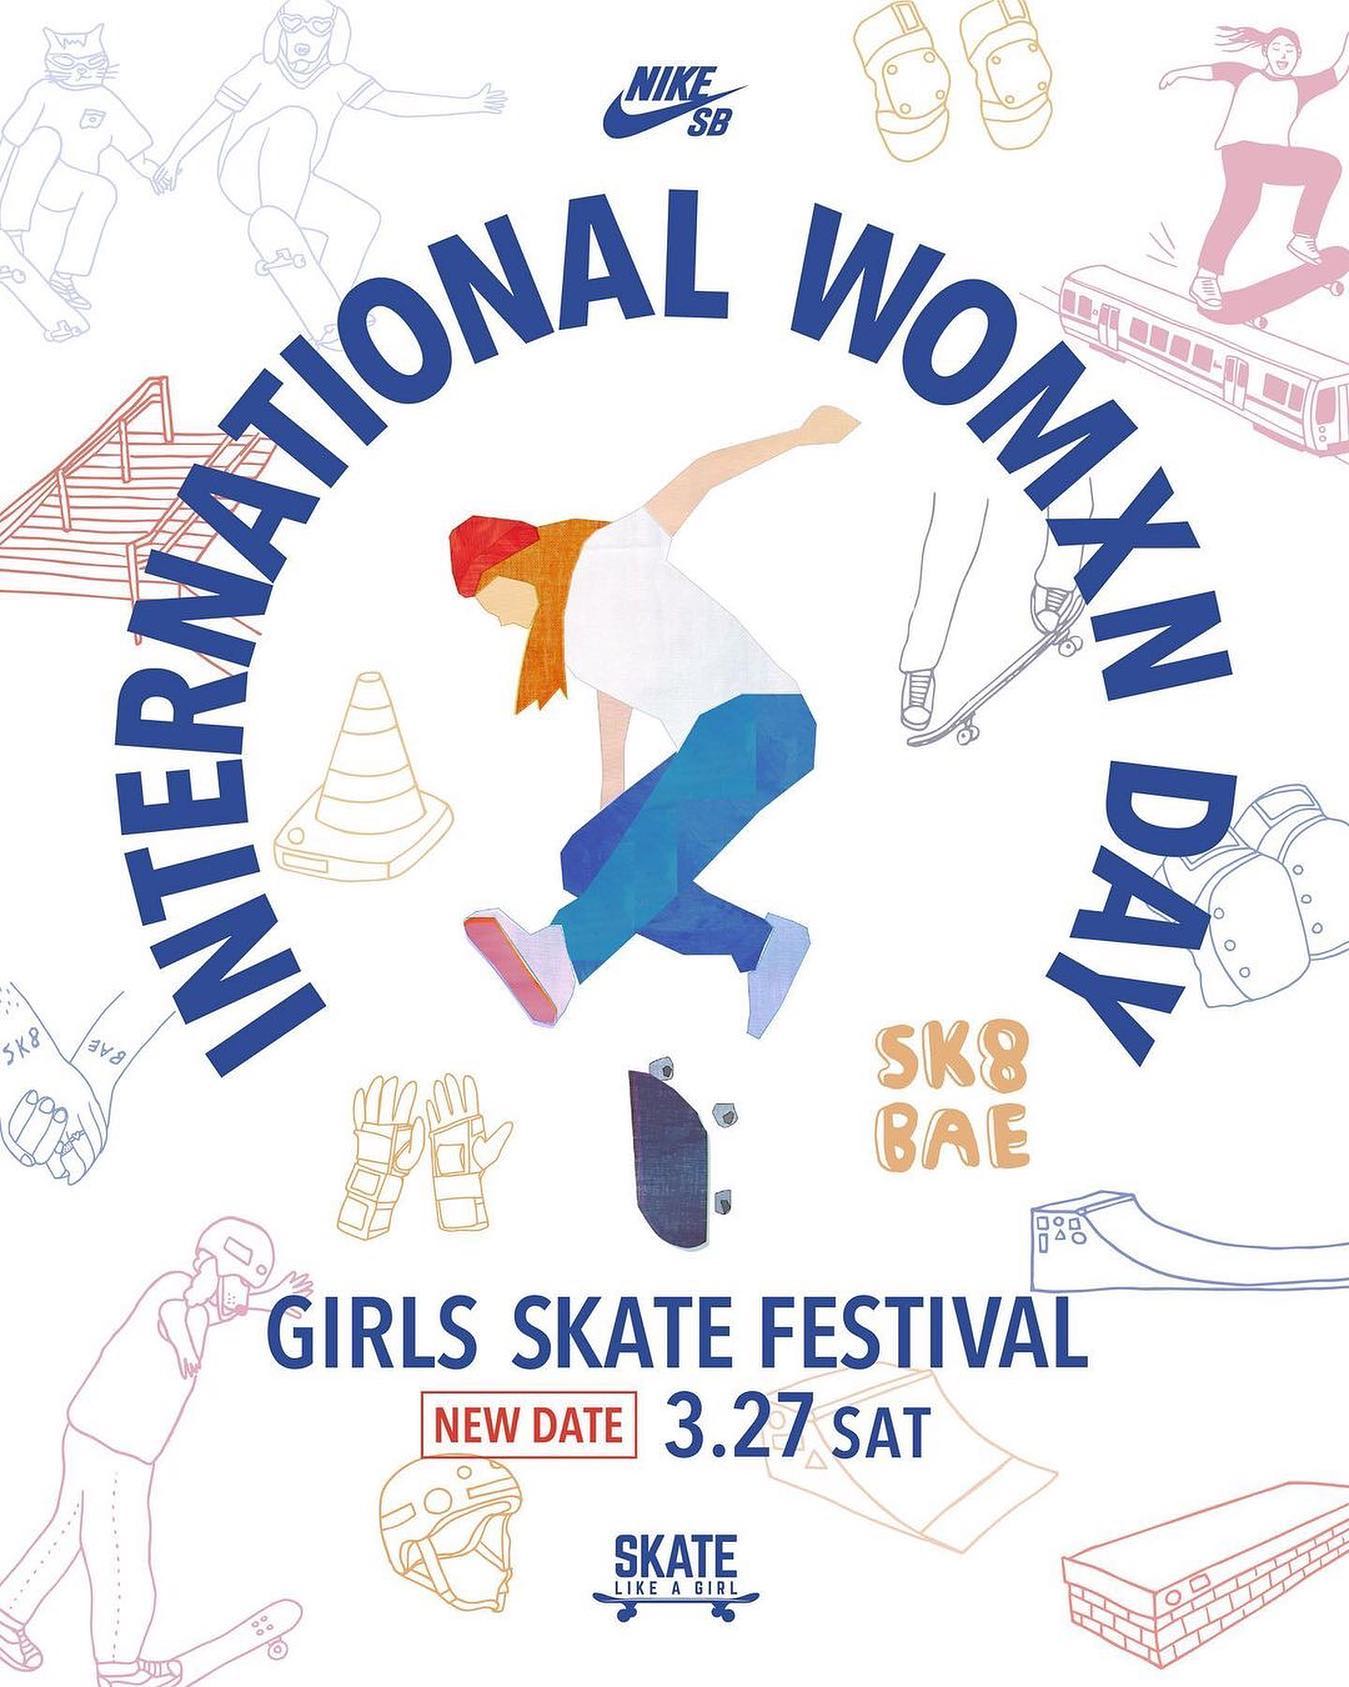 #repost @taka_nu・・・NEW DATE 3.27 !!! 開催日程変更です！「国際女性デー」International Womxn’s Day | GIRLS SKATE FESTIVALを @tokyo_sport_playground にて開催！ガールズスケートコミュニティが新しい文化に！3/27 (Sat.) 16:00 - 21:0016:00 - BEGINNER SKATE SCHOOL18:20 - GIRLS SKATE FESTIVAL OPENING18:30 - PUSH RACE19:00 - BEST TRICK CONTESTWORK SHOP / Maki Hirochi ART EXHIBITION 18:20 - 20:00:  IG LIVE @nikesbdojoEvent hosted by @taka_nu@skatelikeagirl@nikesb@nikesbdojo@makihirochi@maccosmeticsjapan@xgirljp@instant_skateboards@girlskateboards_japan@almostskateboards@welcomeskateboards@royaltrucks@the_bearing@bangolufsen＊雨天延期＊状況によりイベント内容は変更する可能性があります。＊延期前に登録された方は、別途連絡が届く予定です。#IWD2021 #ChooseToChallenge